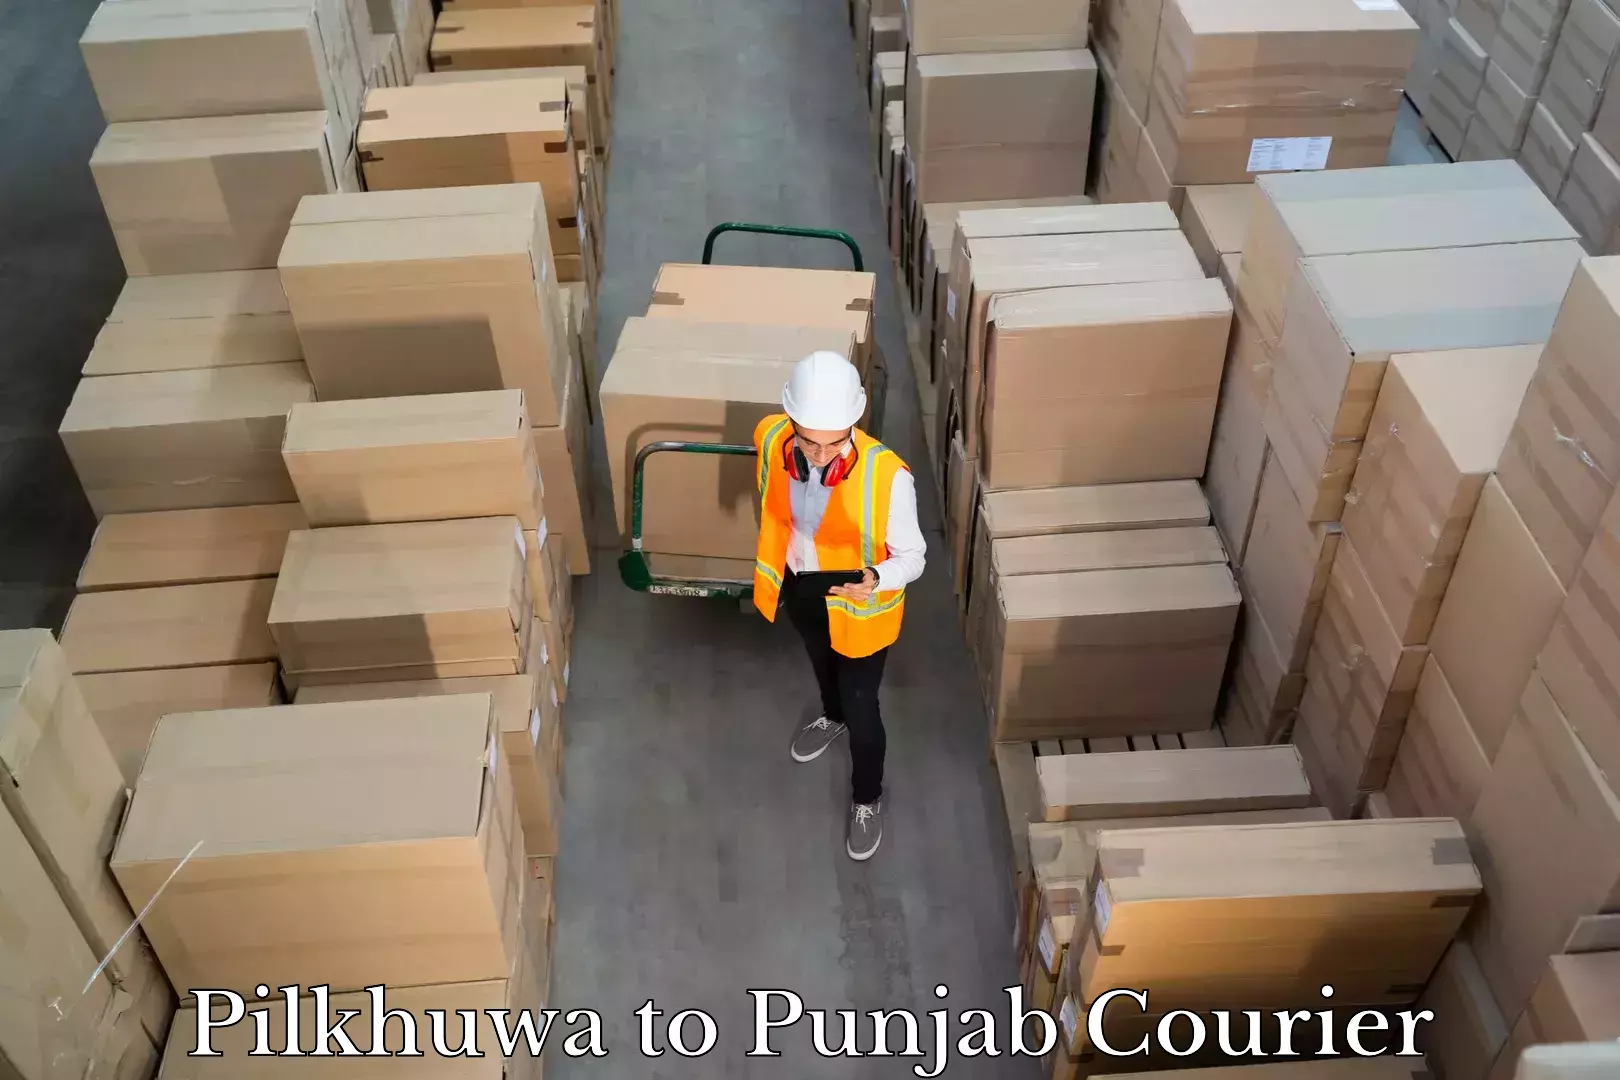 Luggage transport service in Pilkhuwa to Punjab